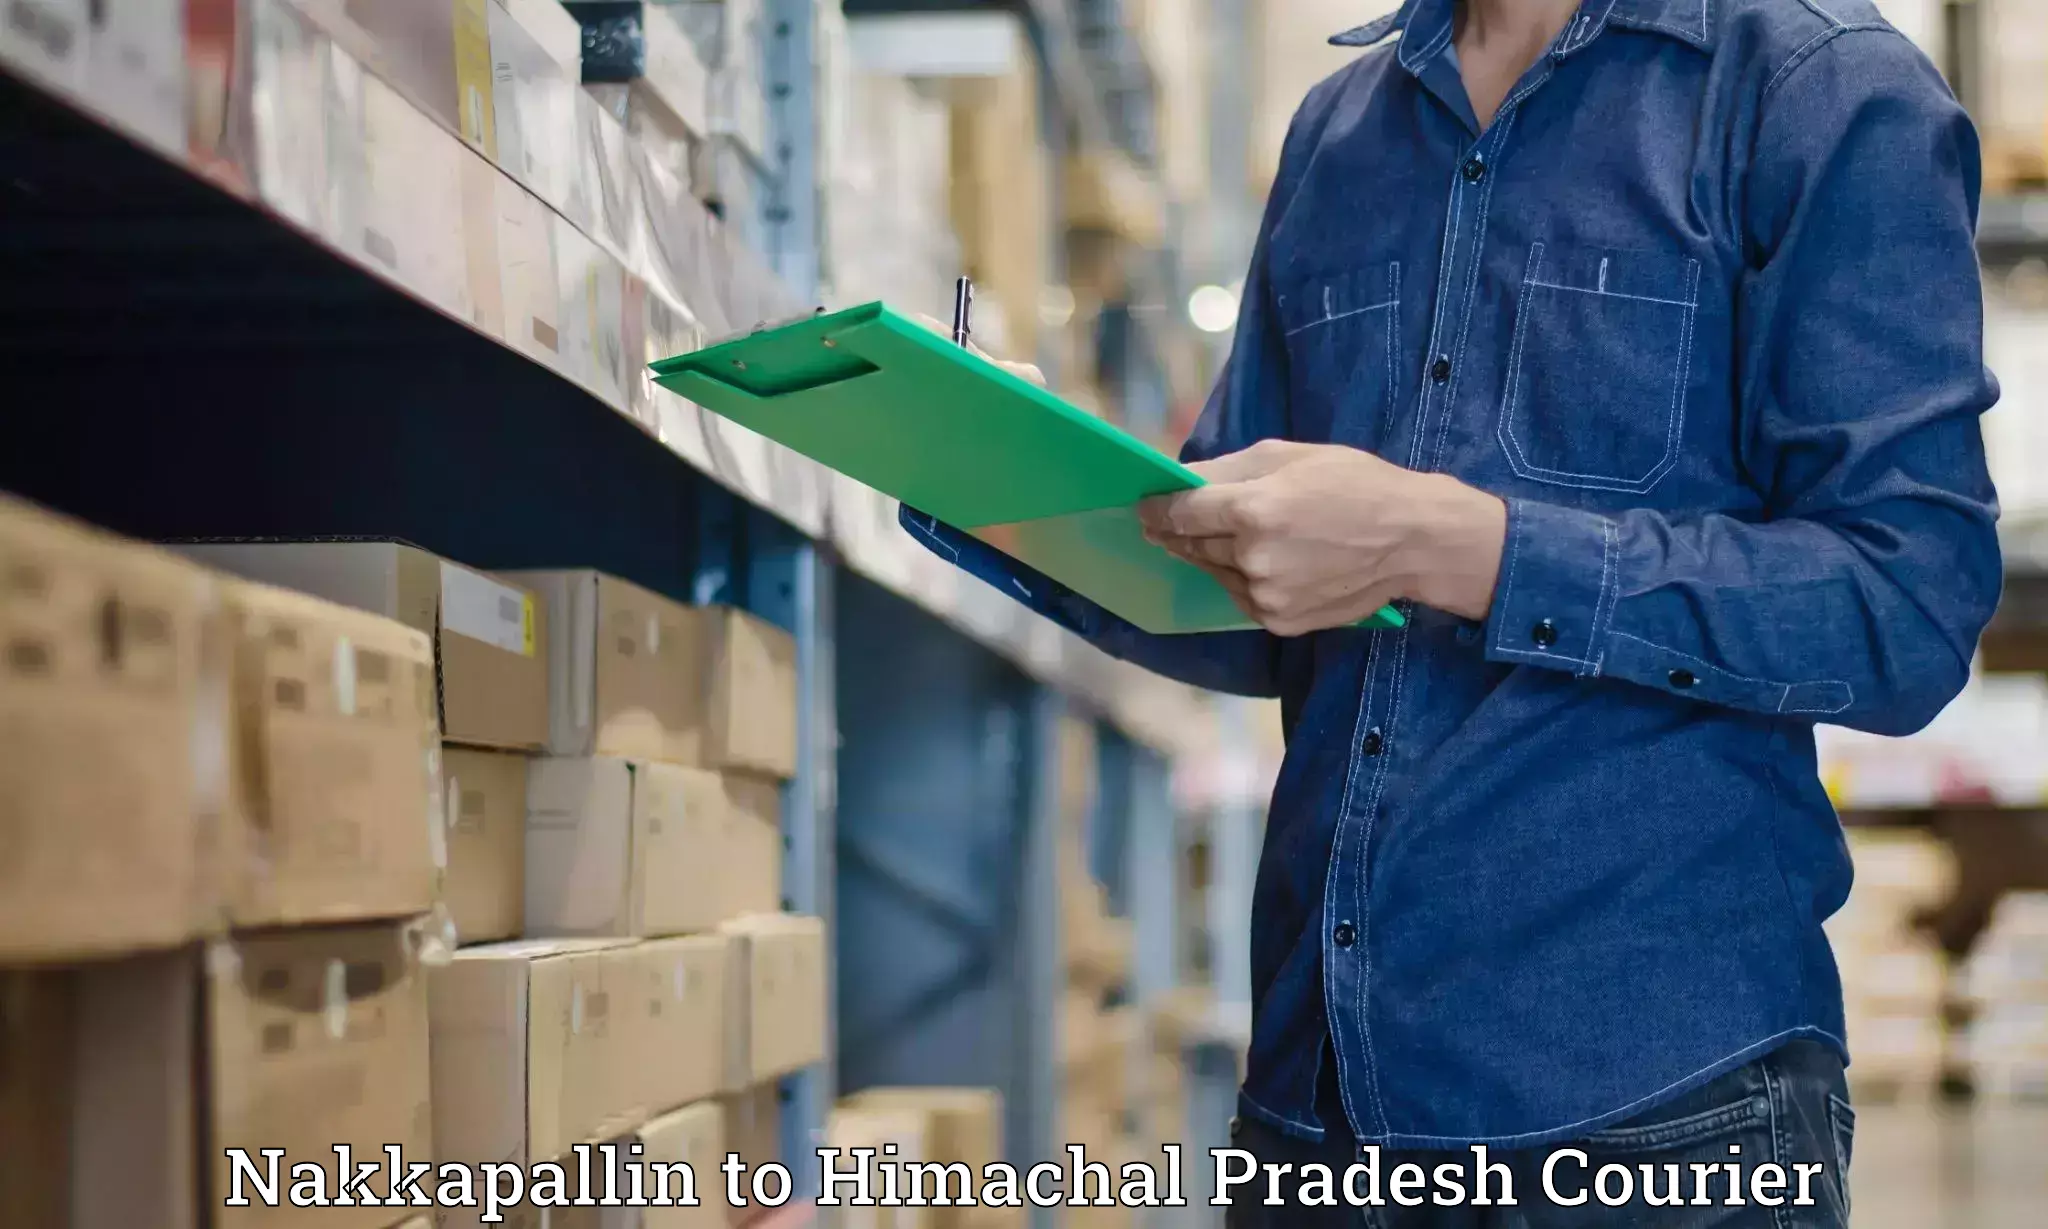 International courier networks Nakkapallin to Himachal Pradesh